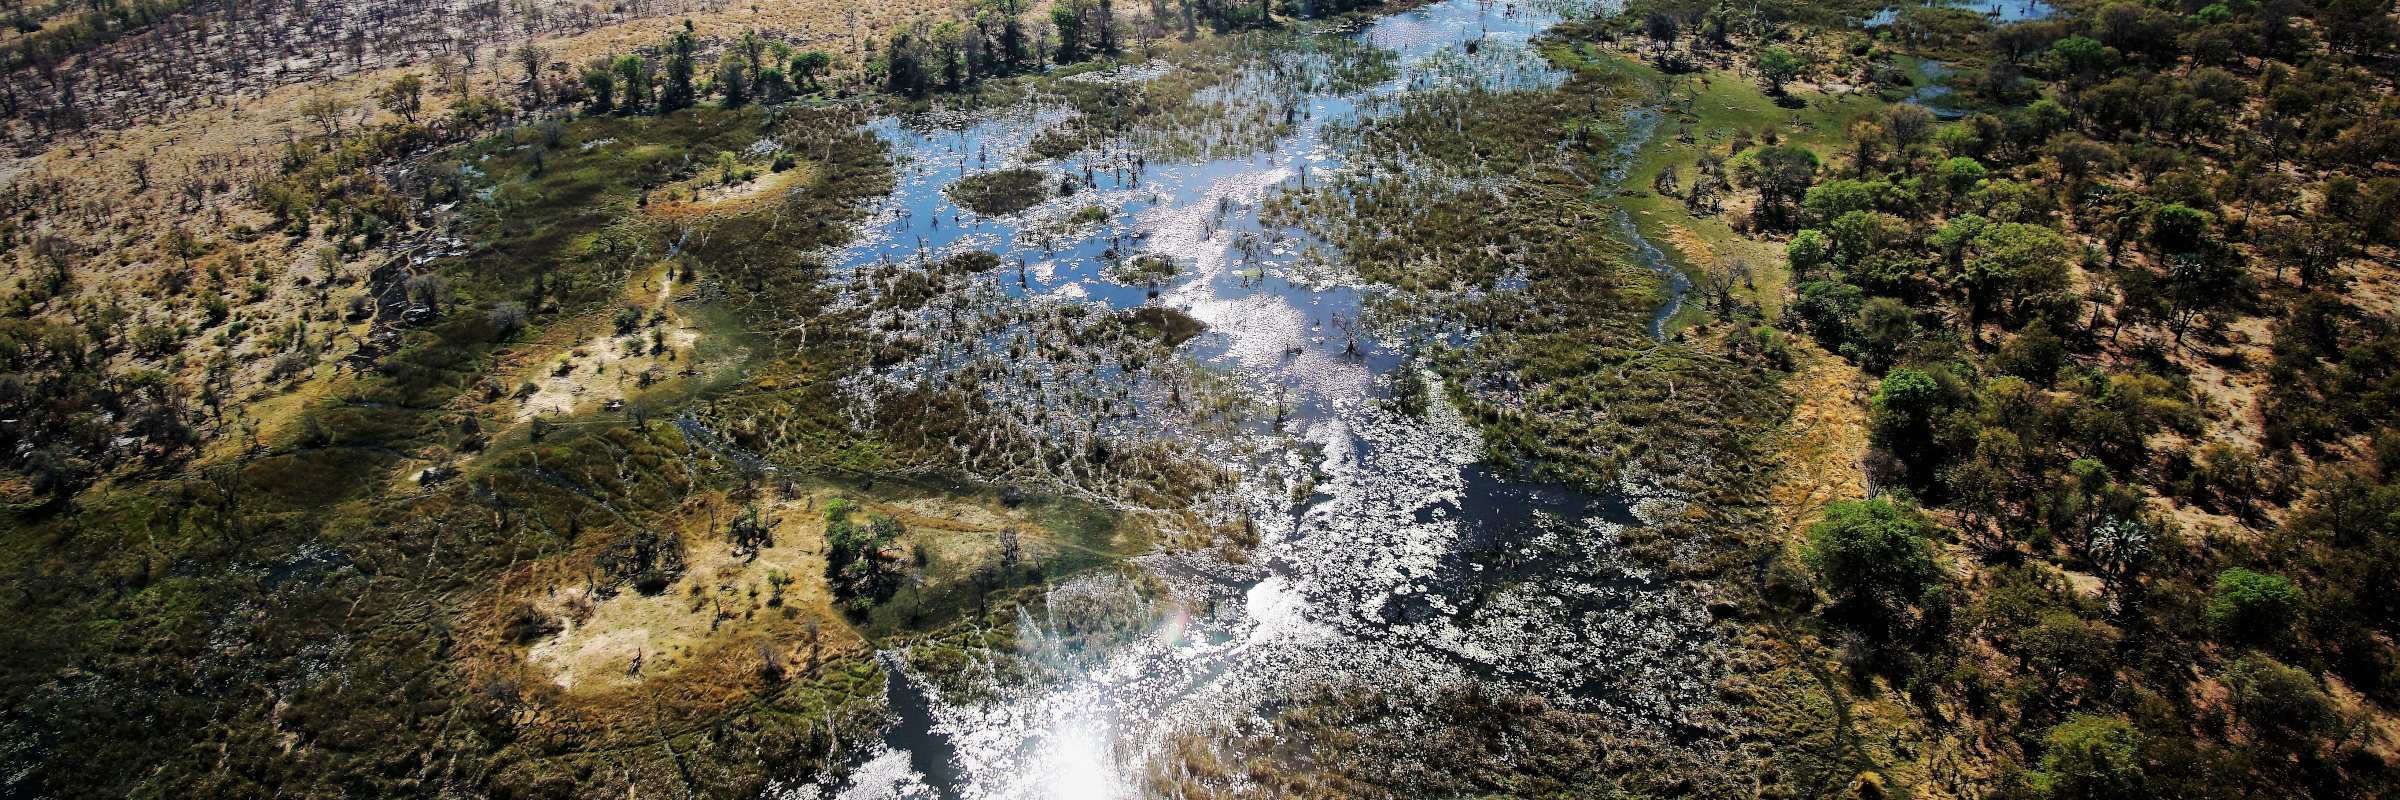 Feuchtsavanne im Okavango-Delta in Botswana